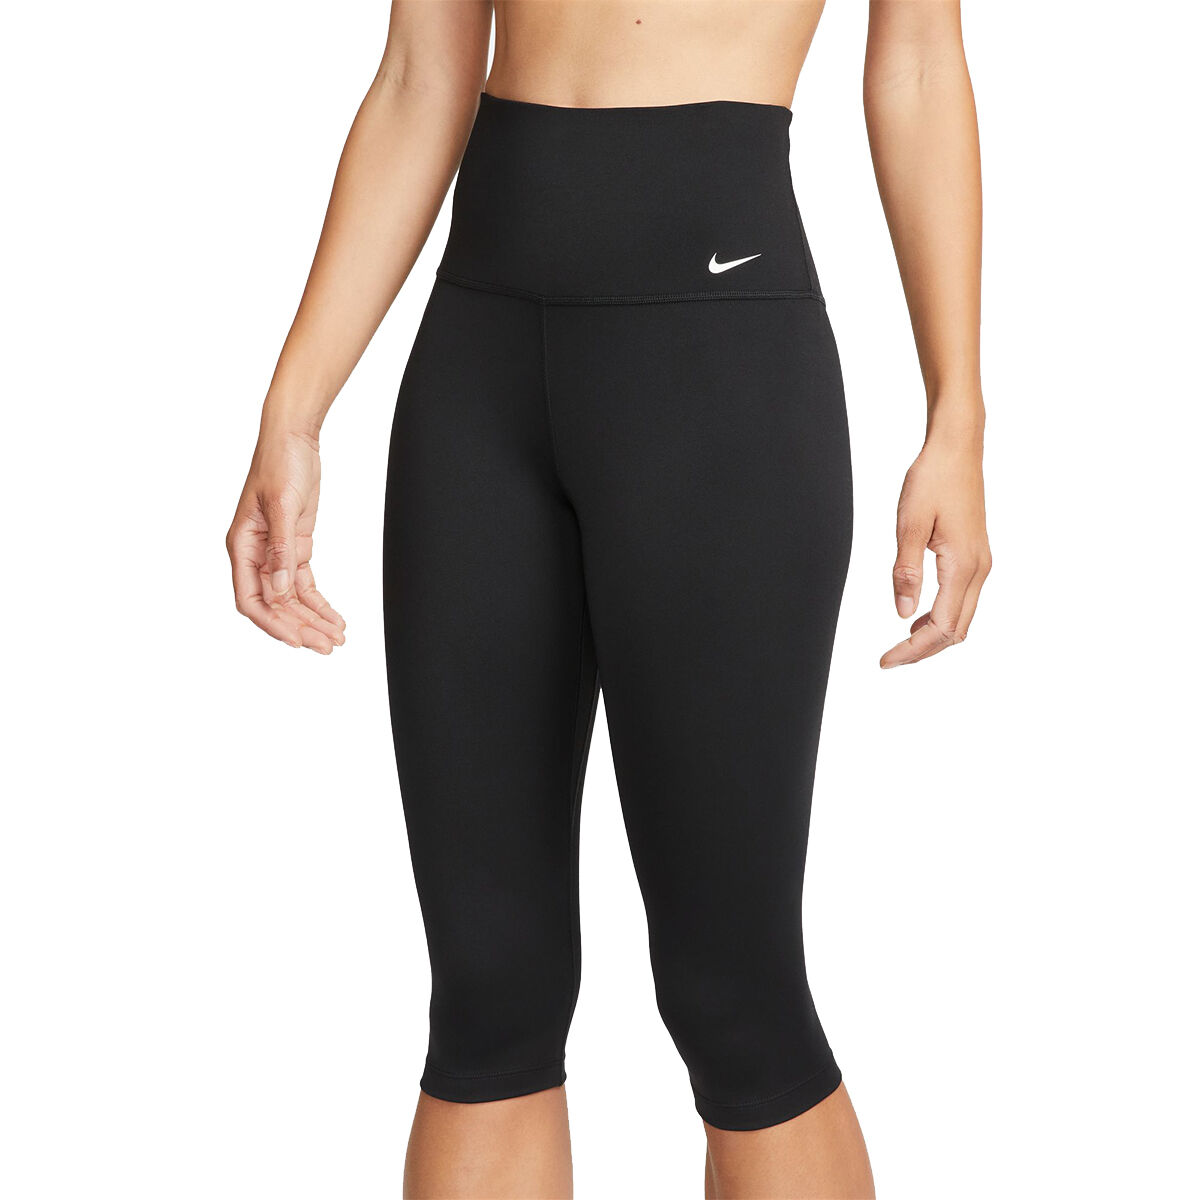 Nike Women's Tights, Running, Training & more